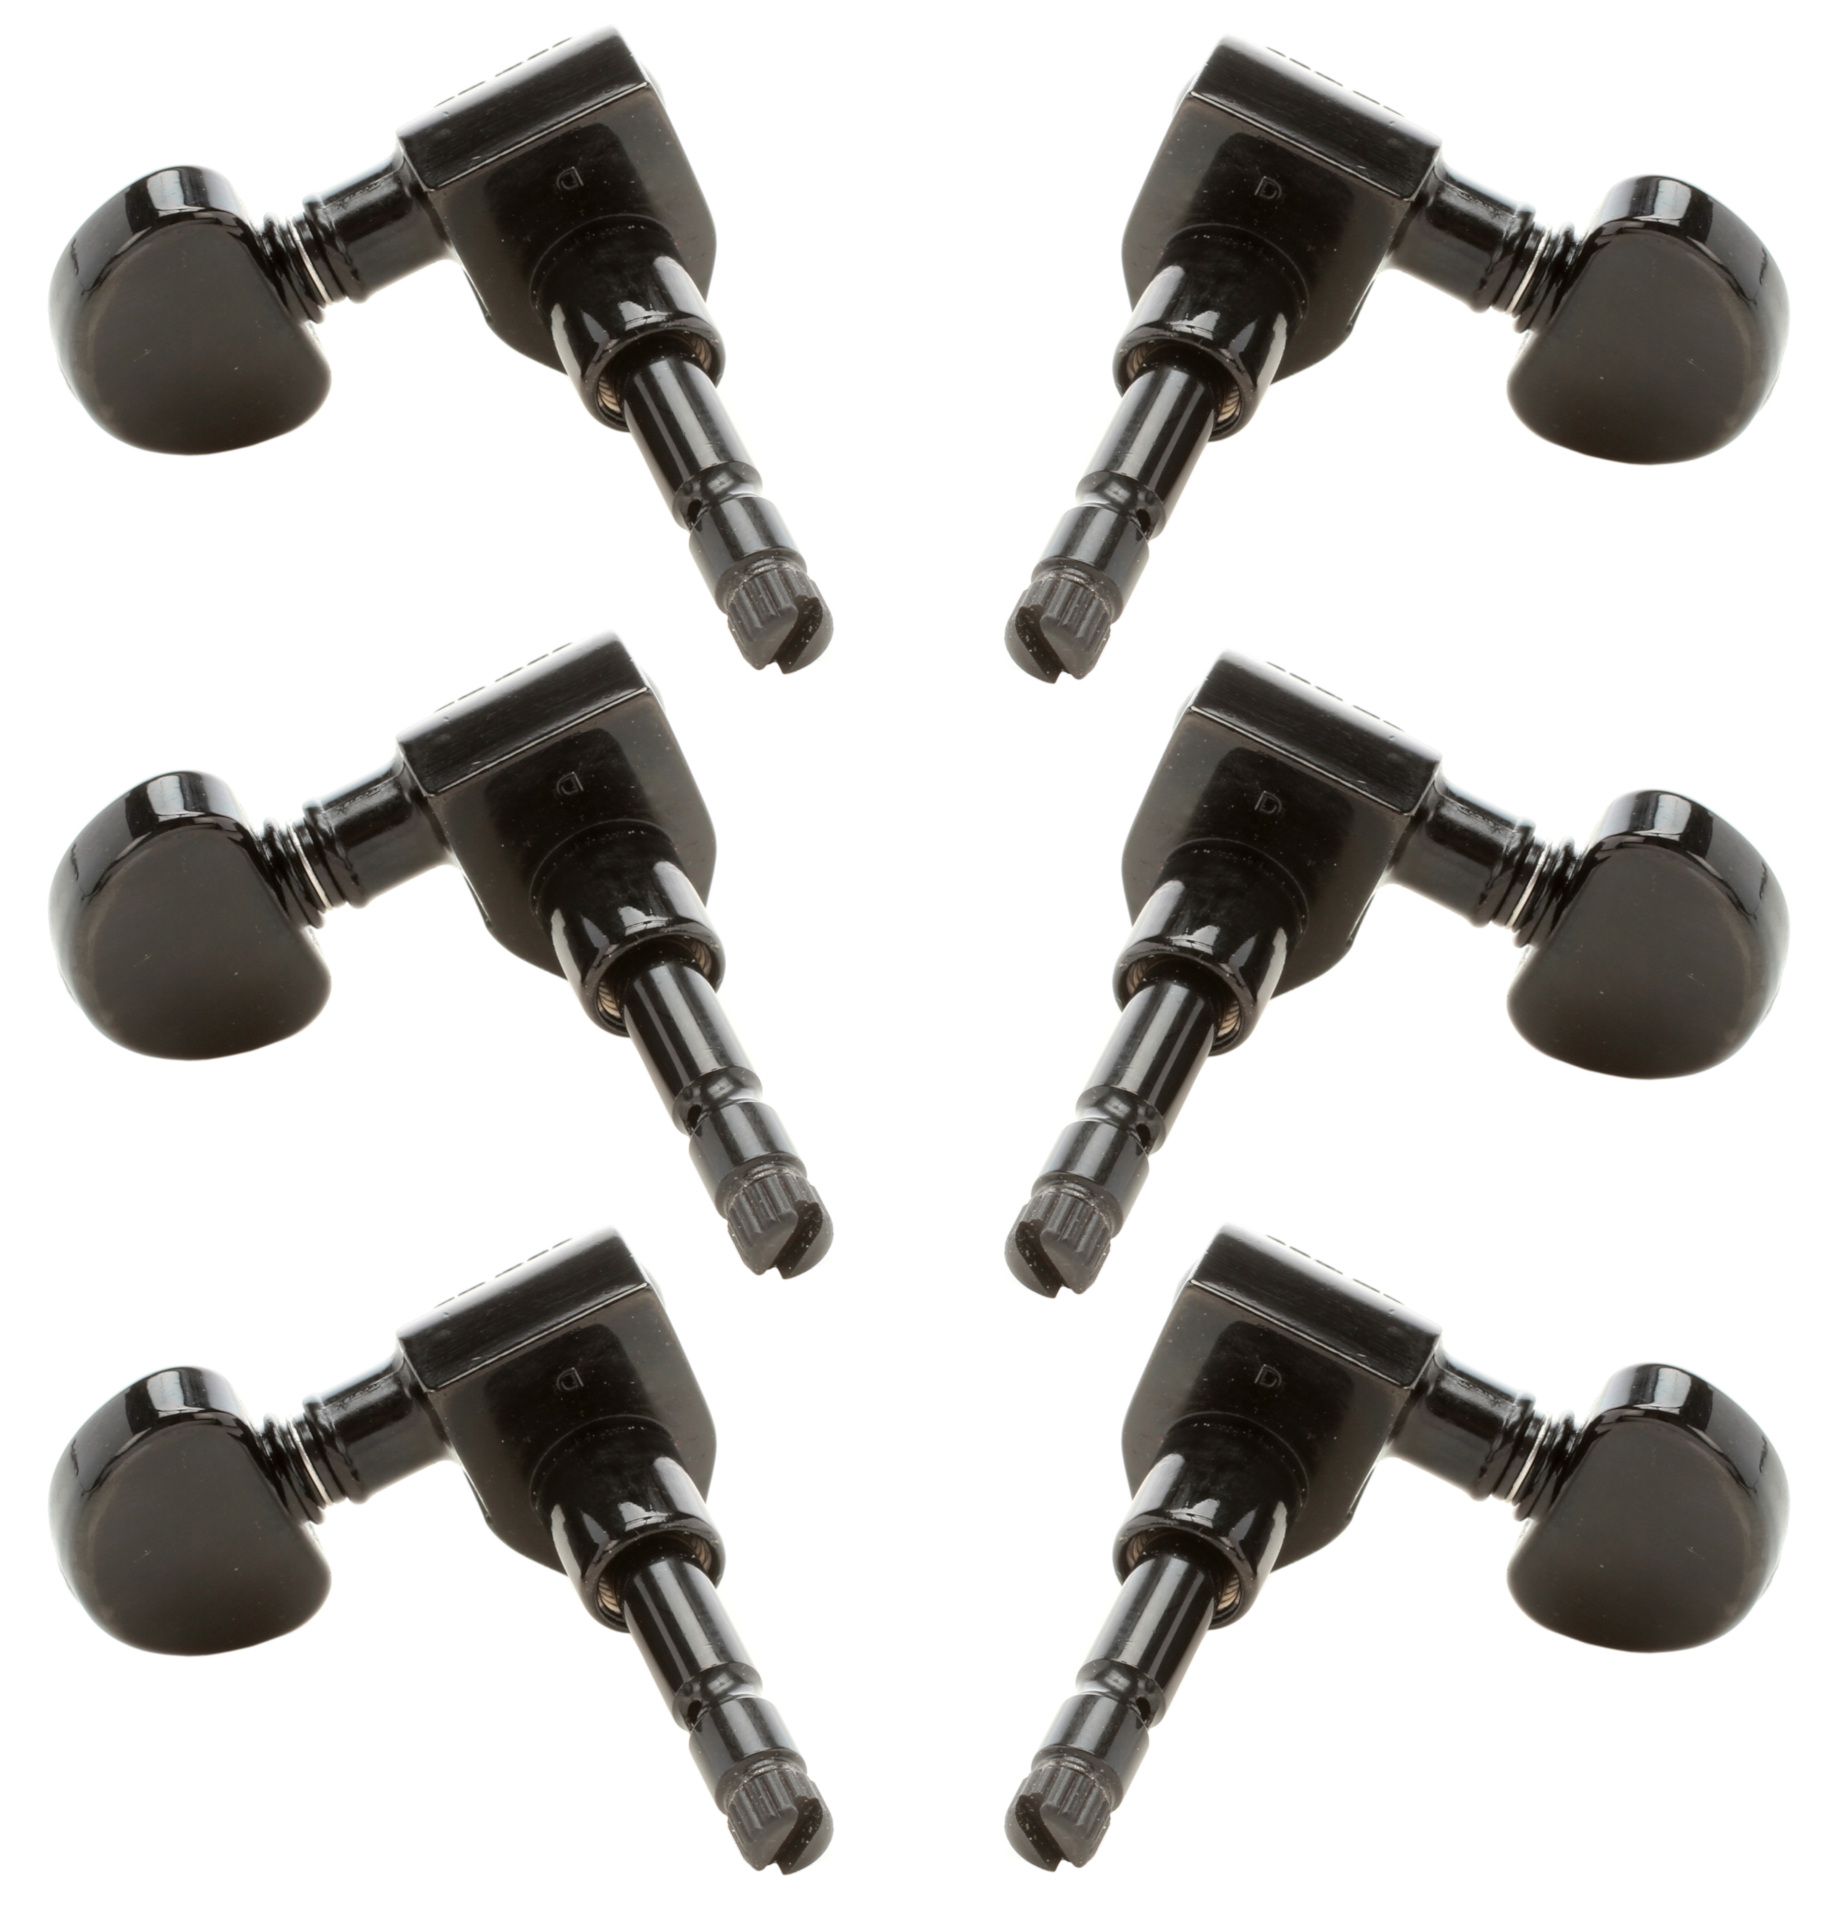 Grover 602B Tip Lock Locking Rotomatics with Round Button - Guitar Machine Heads, 3 + 3 - Black